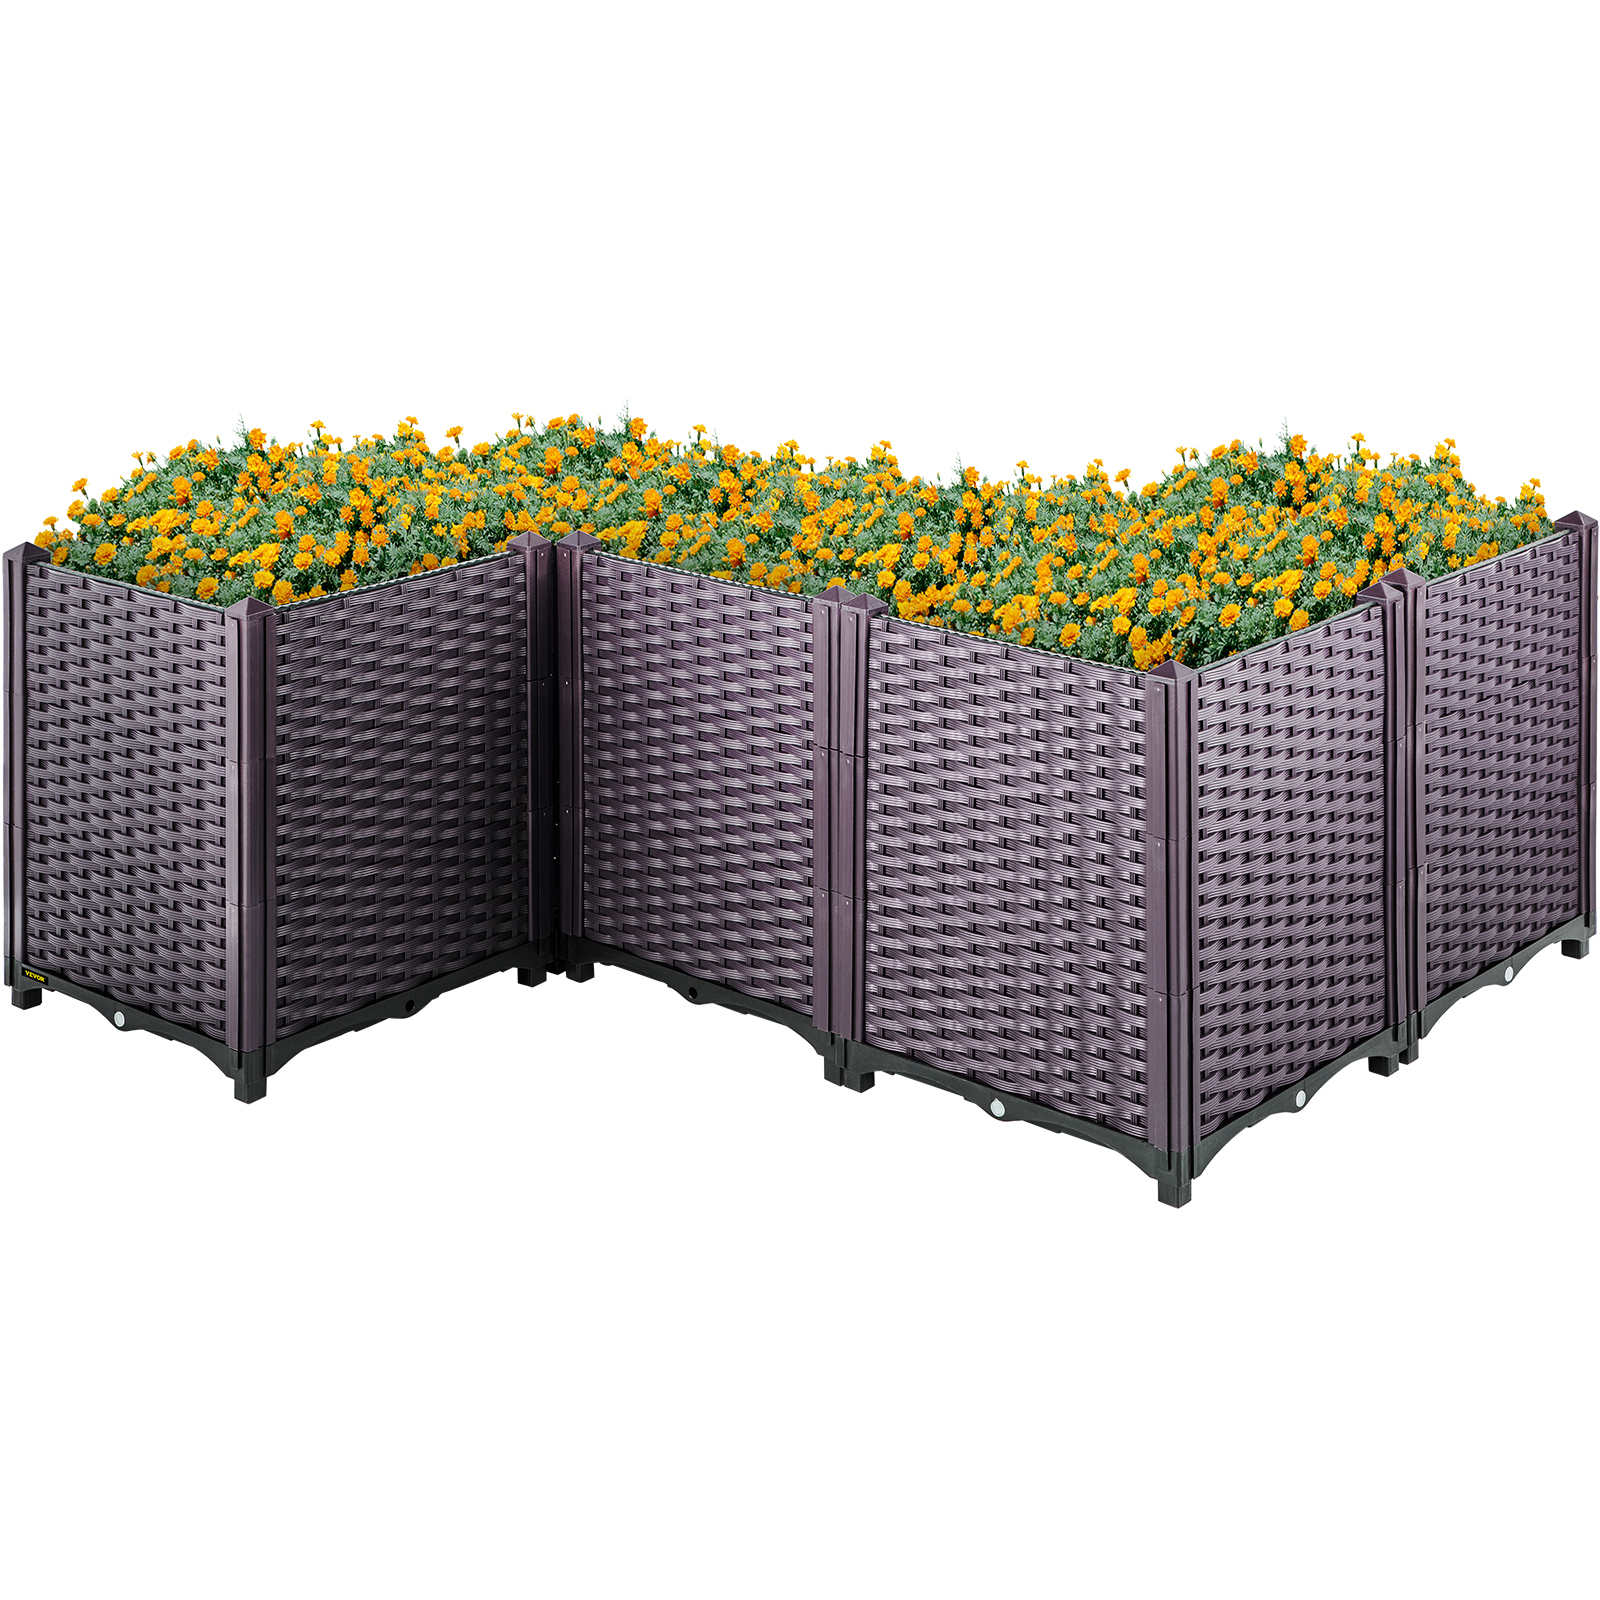 Vevor Elevated Raised Garden Bed Plastic Garden Planter Box 5pcs For Grow Plants от Vevor Many GEOs